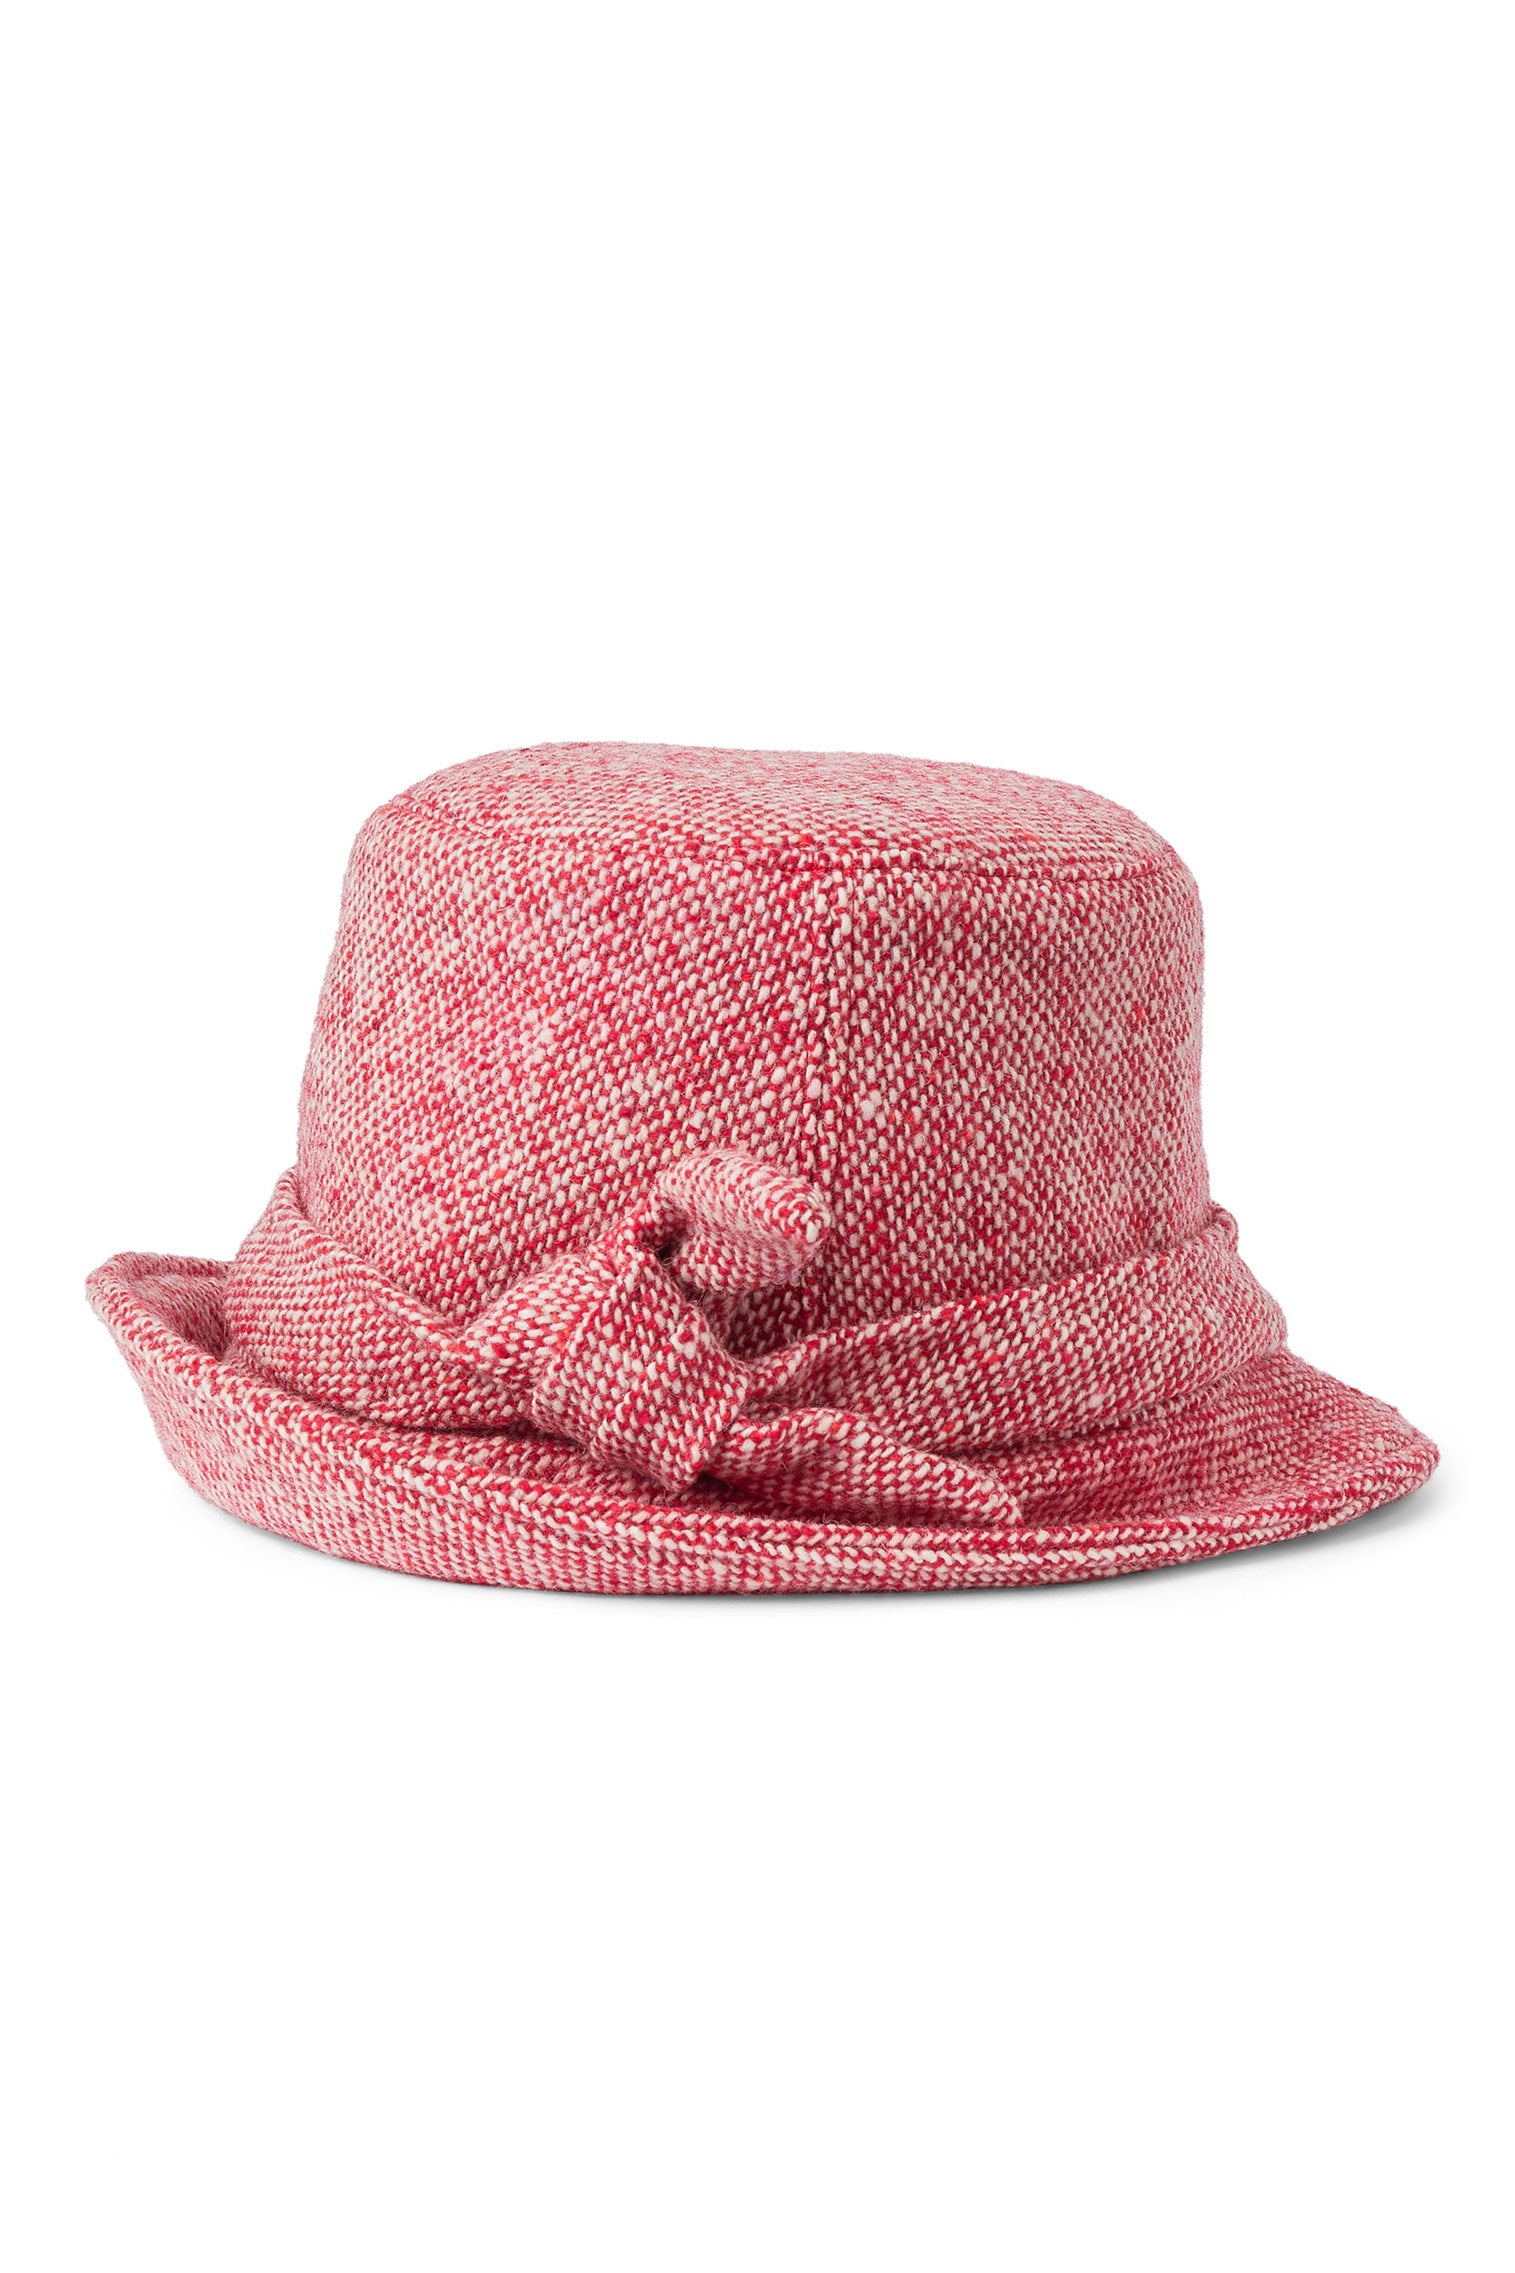 Dolores Red Cloche - Women’s Hats - Lock & Co. Hatters London UK